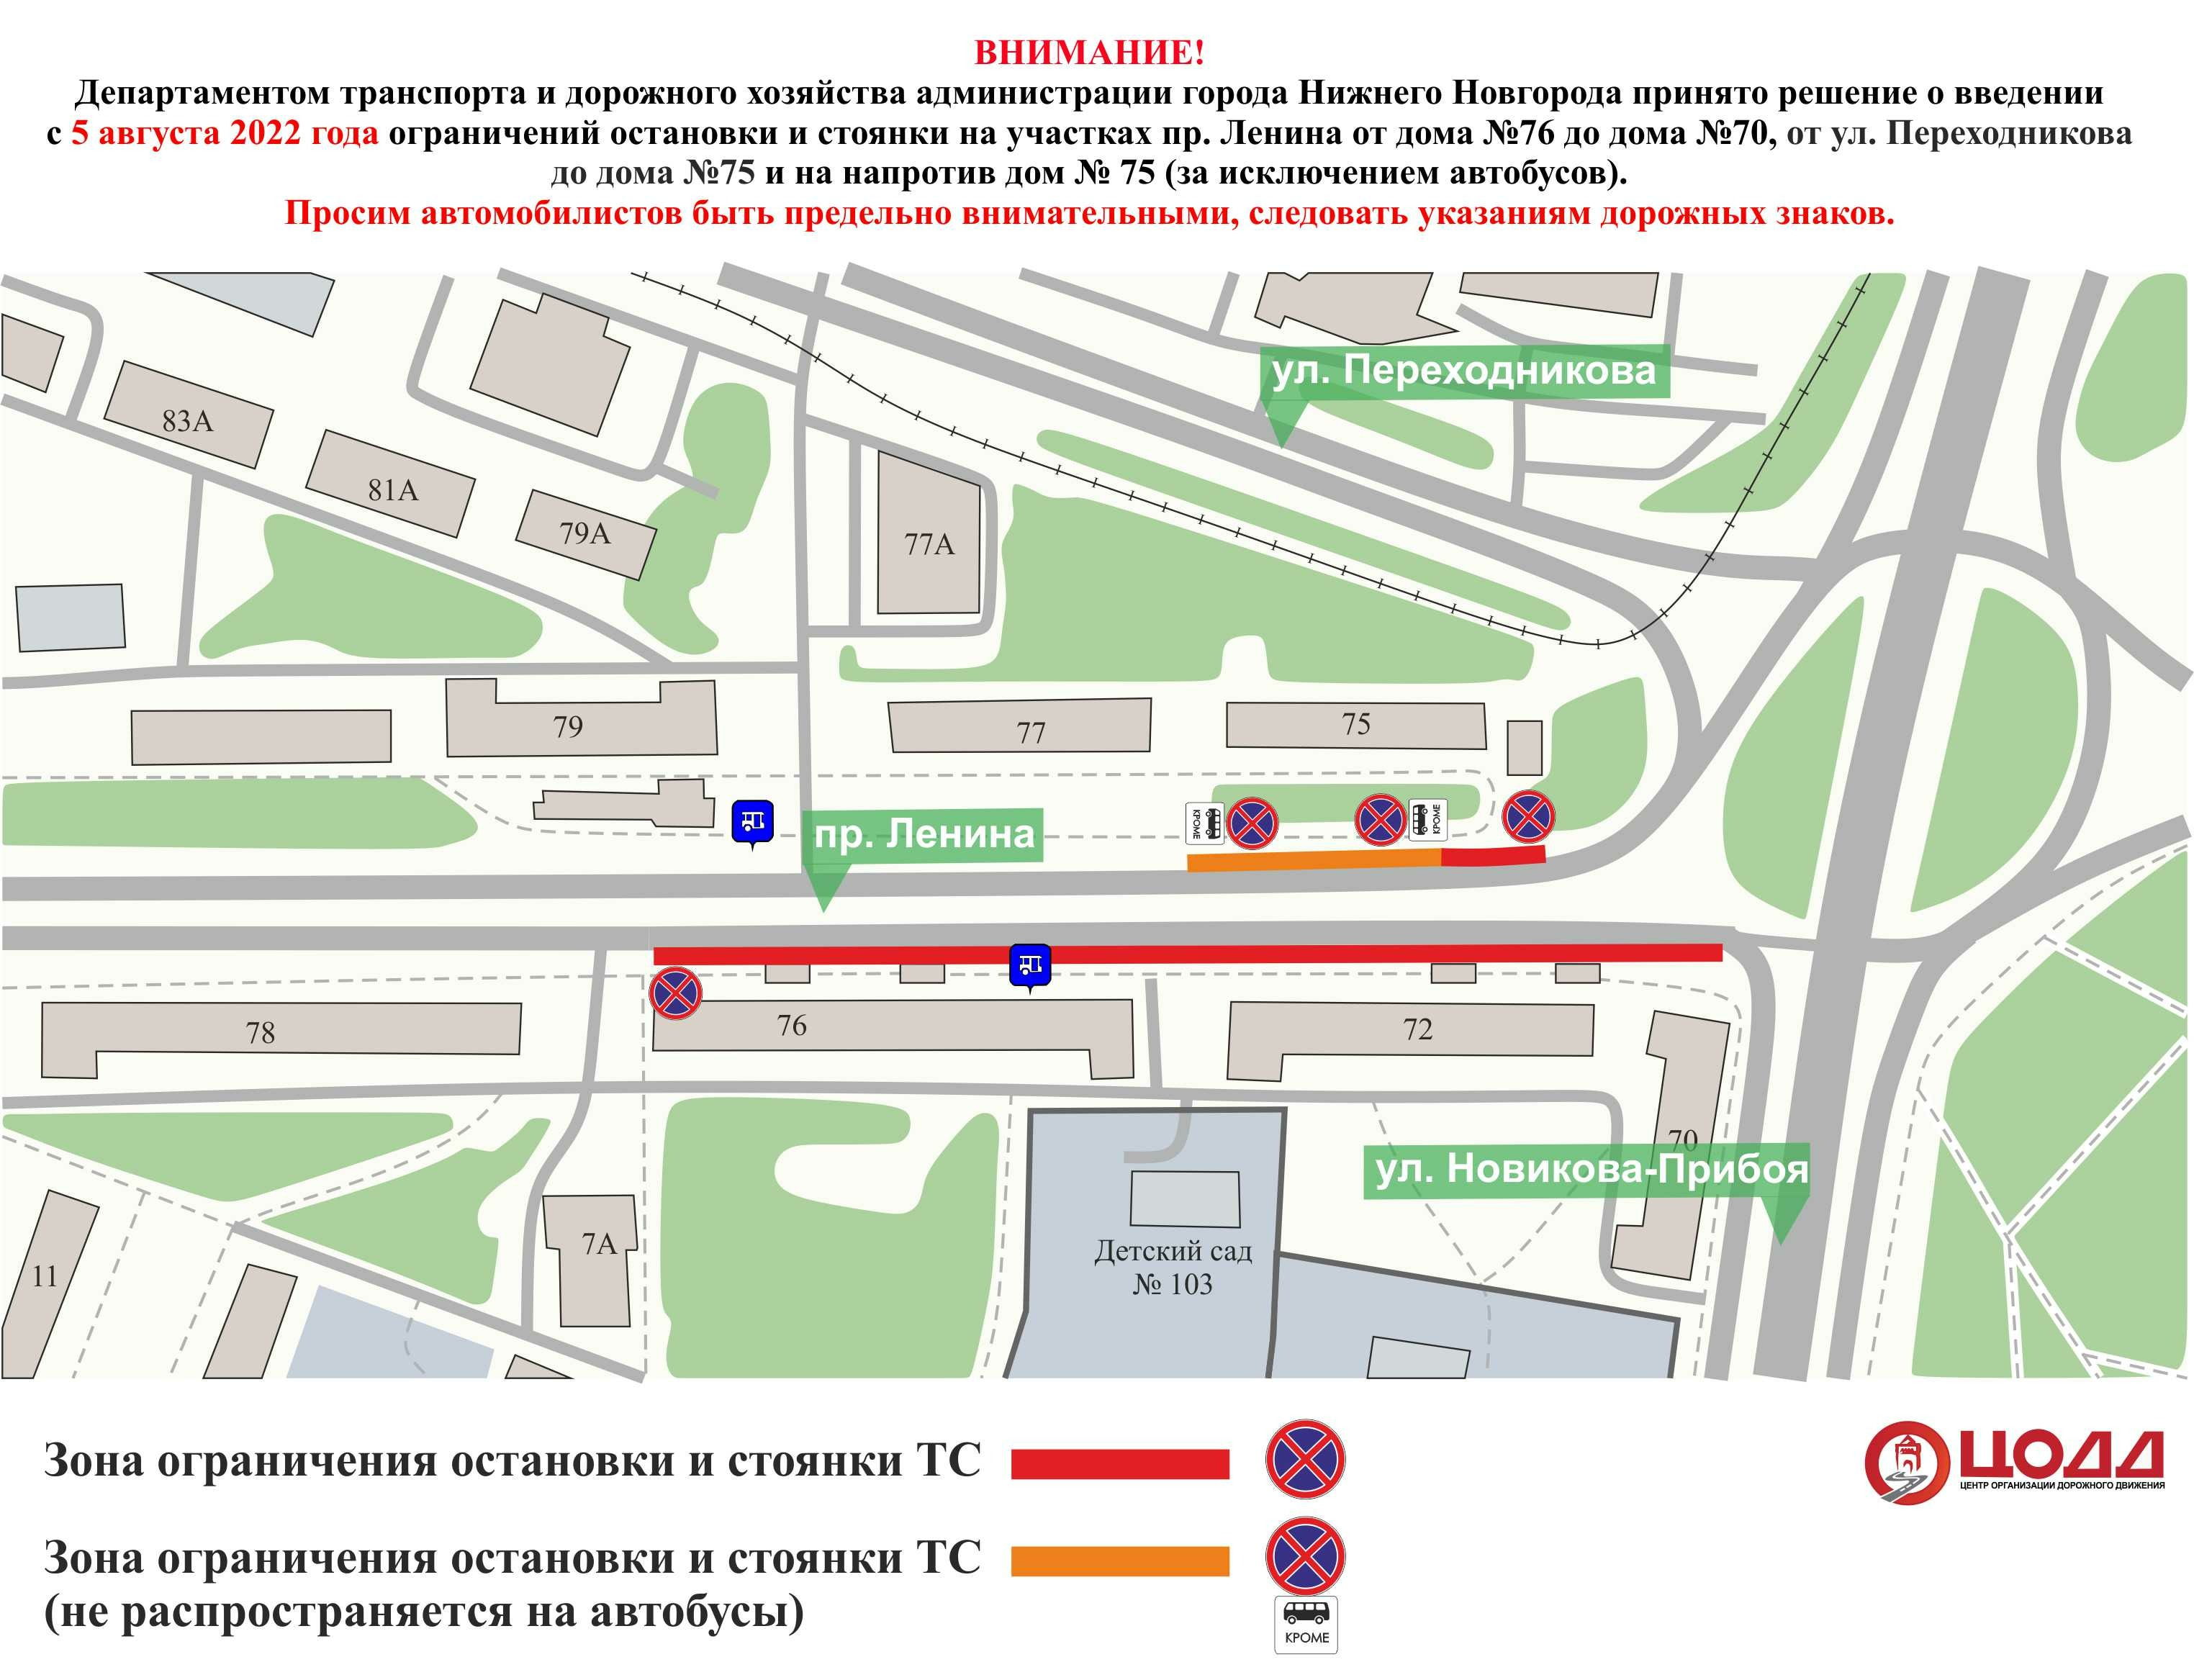 ограничение стоянки и остановки транспорта на проспекте Ленина в Нижнем Новгороде с 5 августа